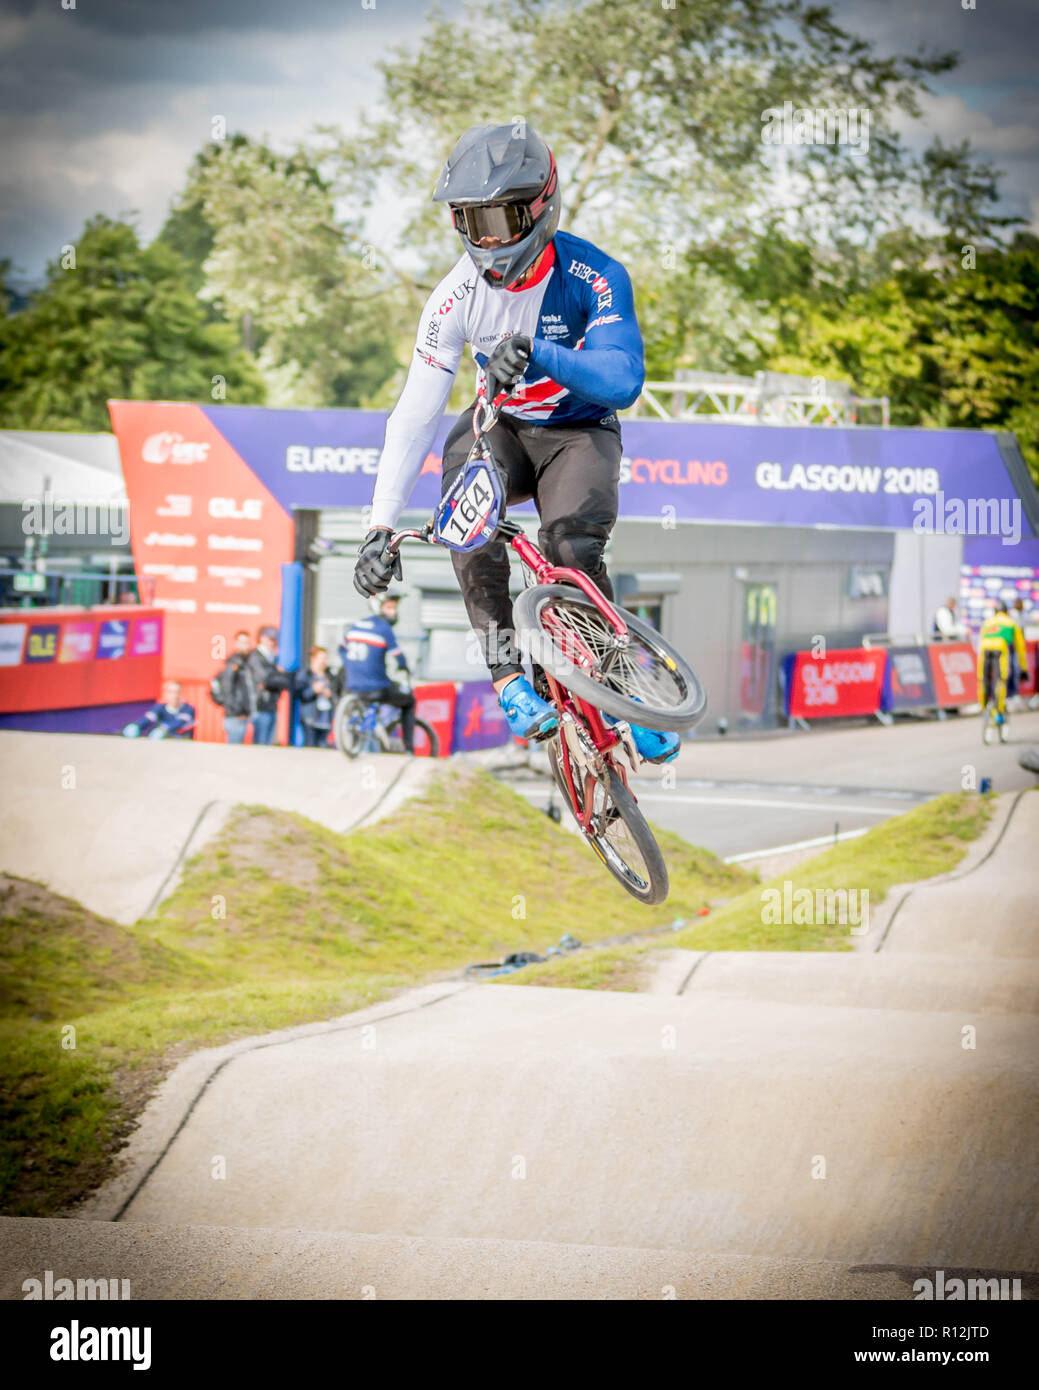 Quillan Isidoro (Team GB) Glasgow2018 Campionati Europei - una gara di BMX Foto Stock